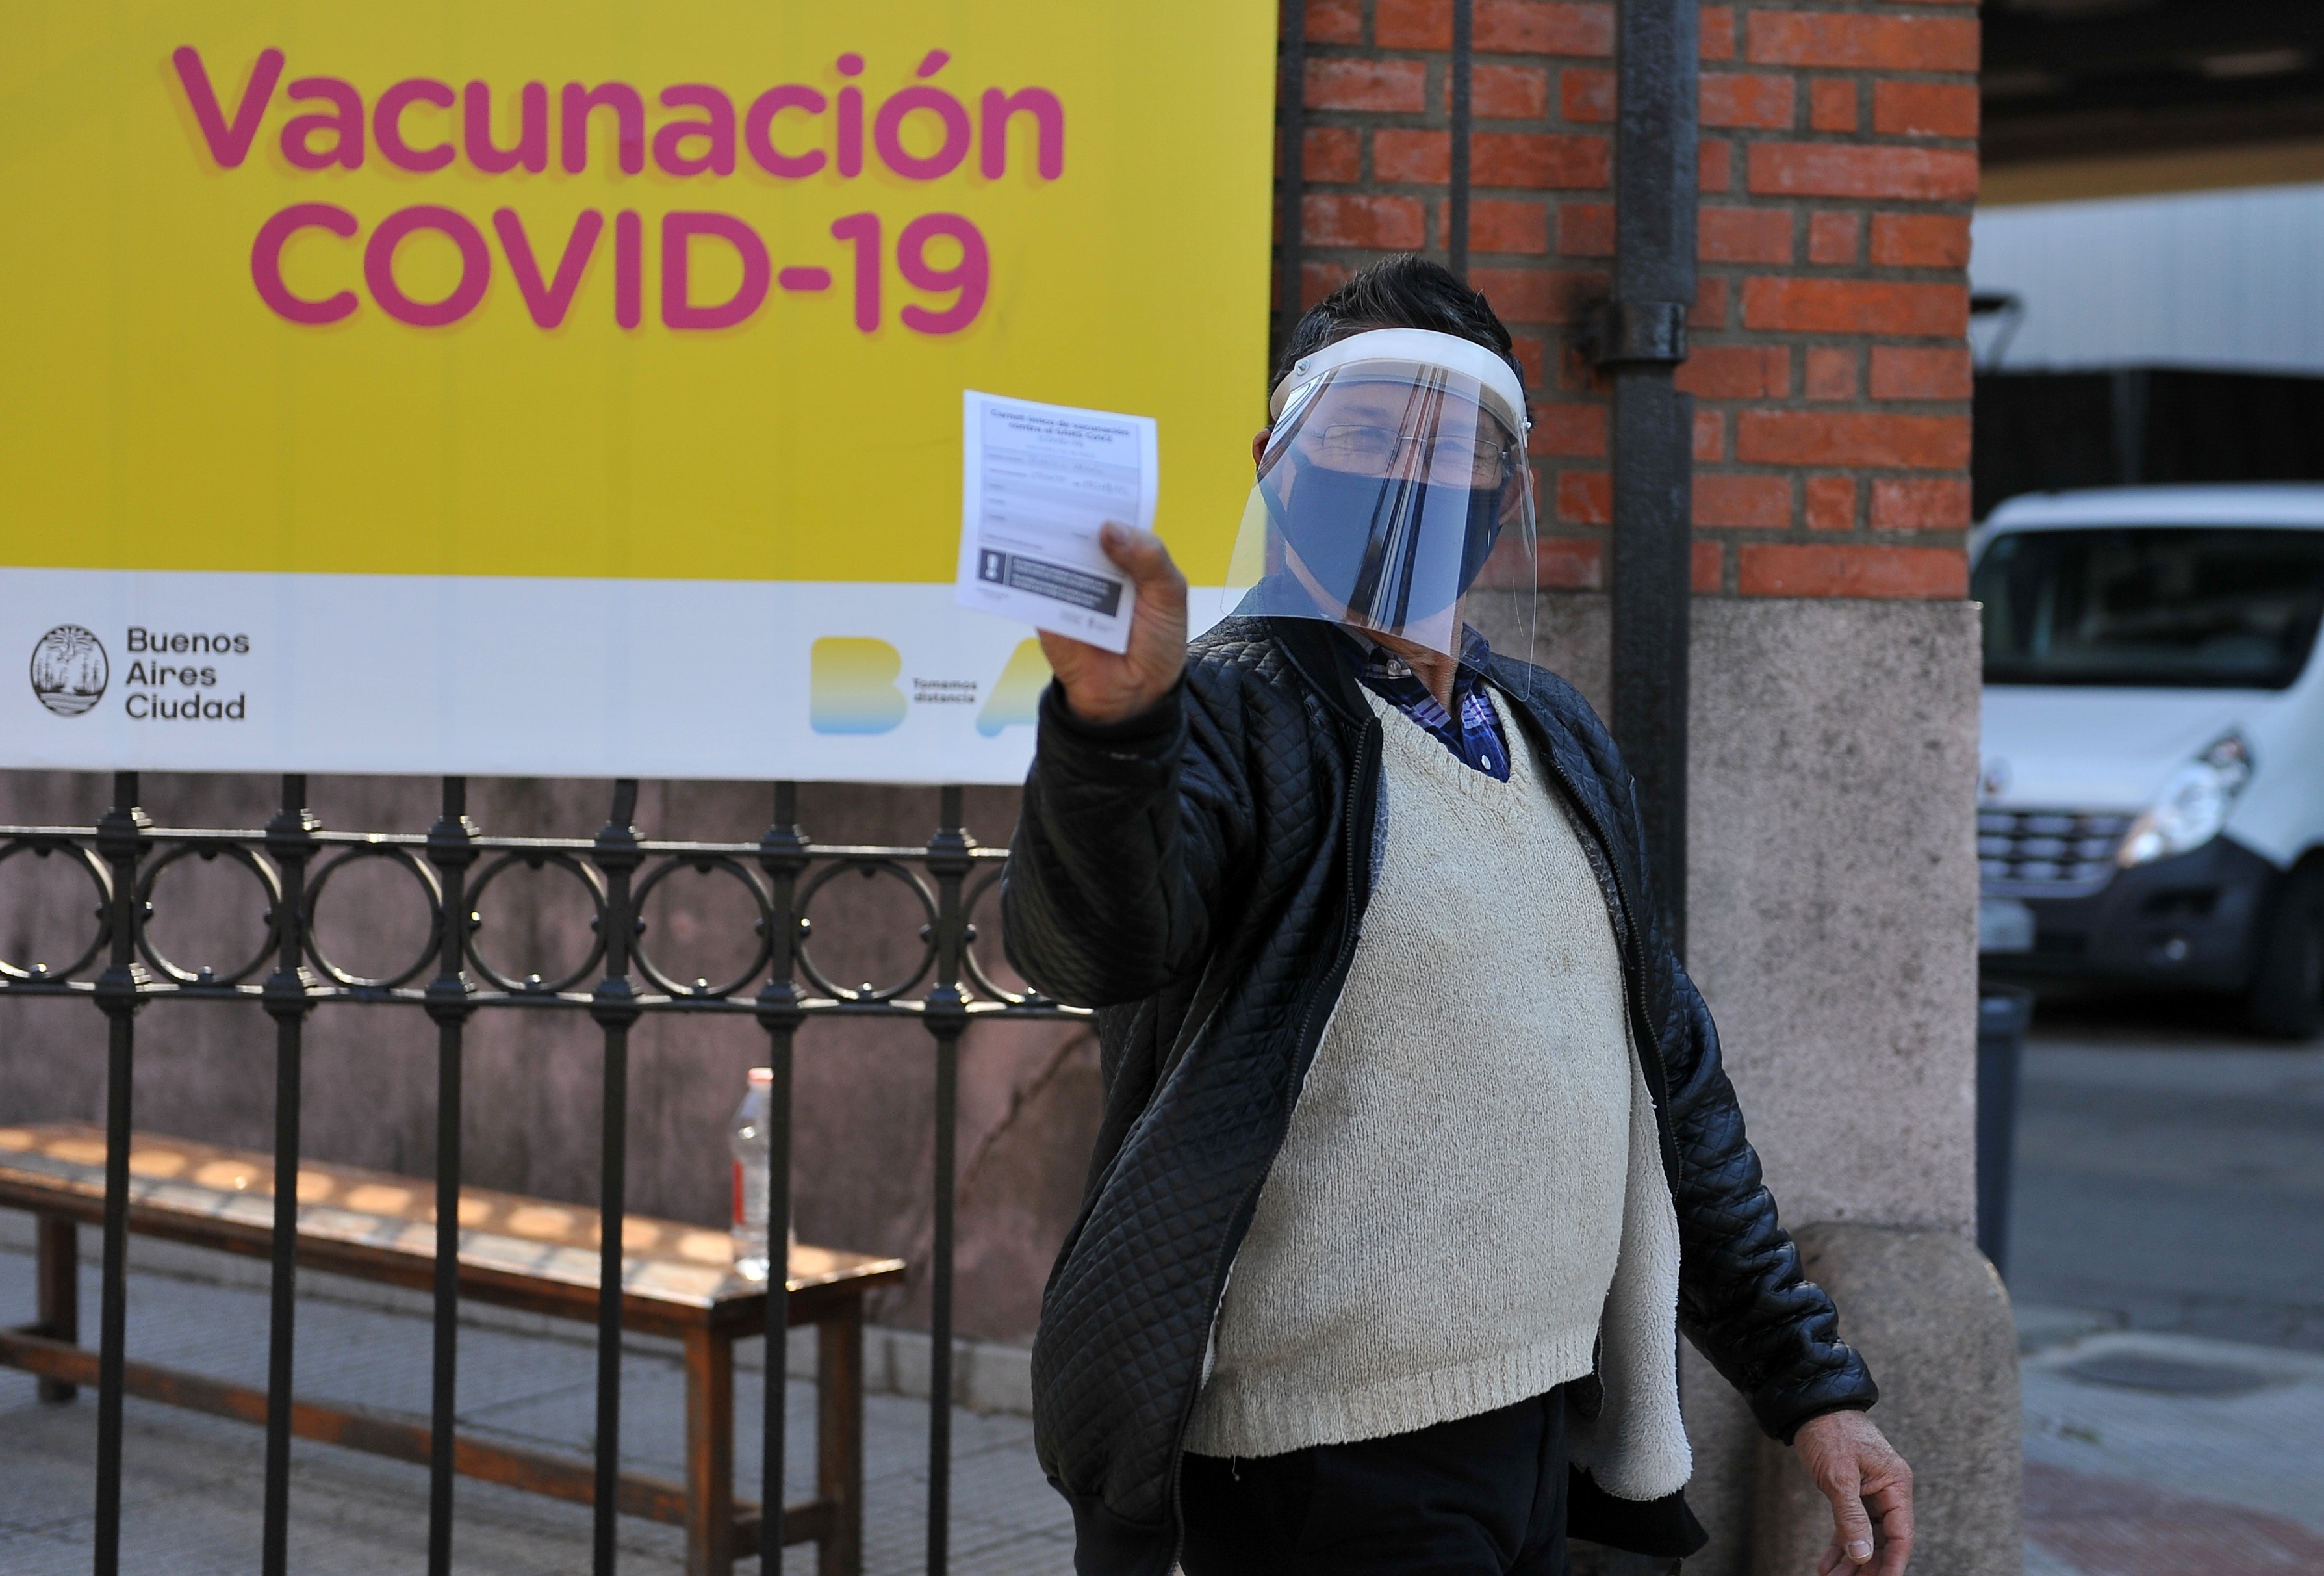 90% des nouveaux cas confirmés de COVID-19 sont des résidents de l'AMBA (EFE / Enrique García Medina)